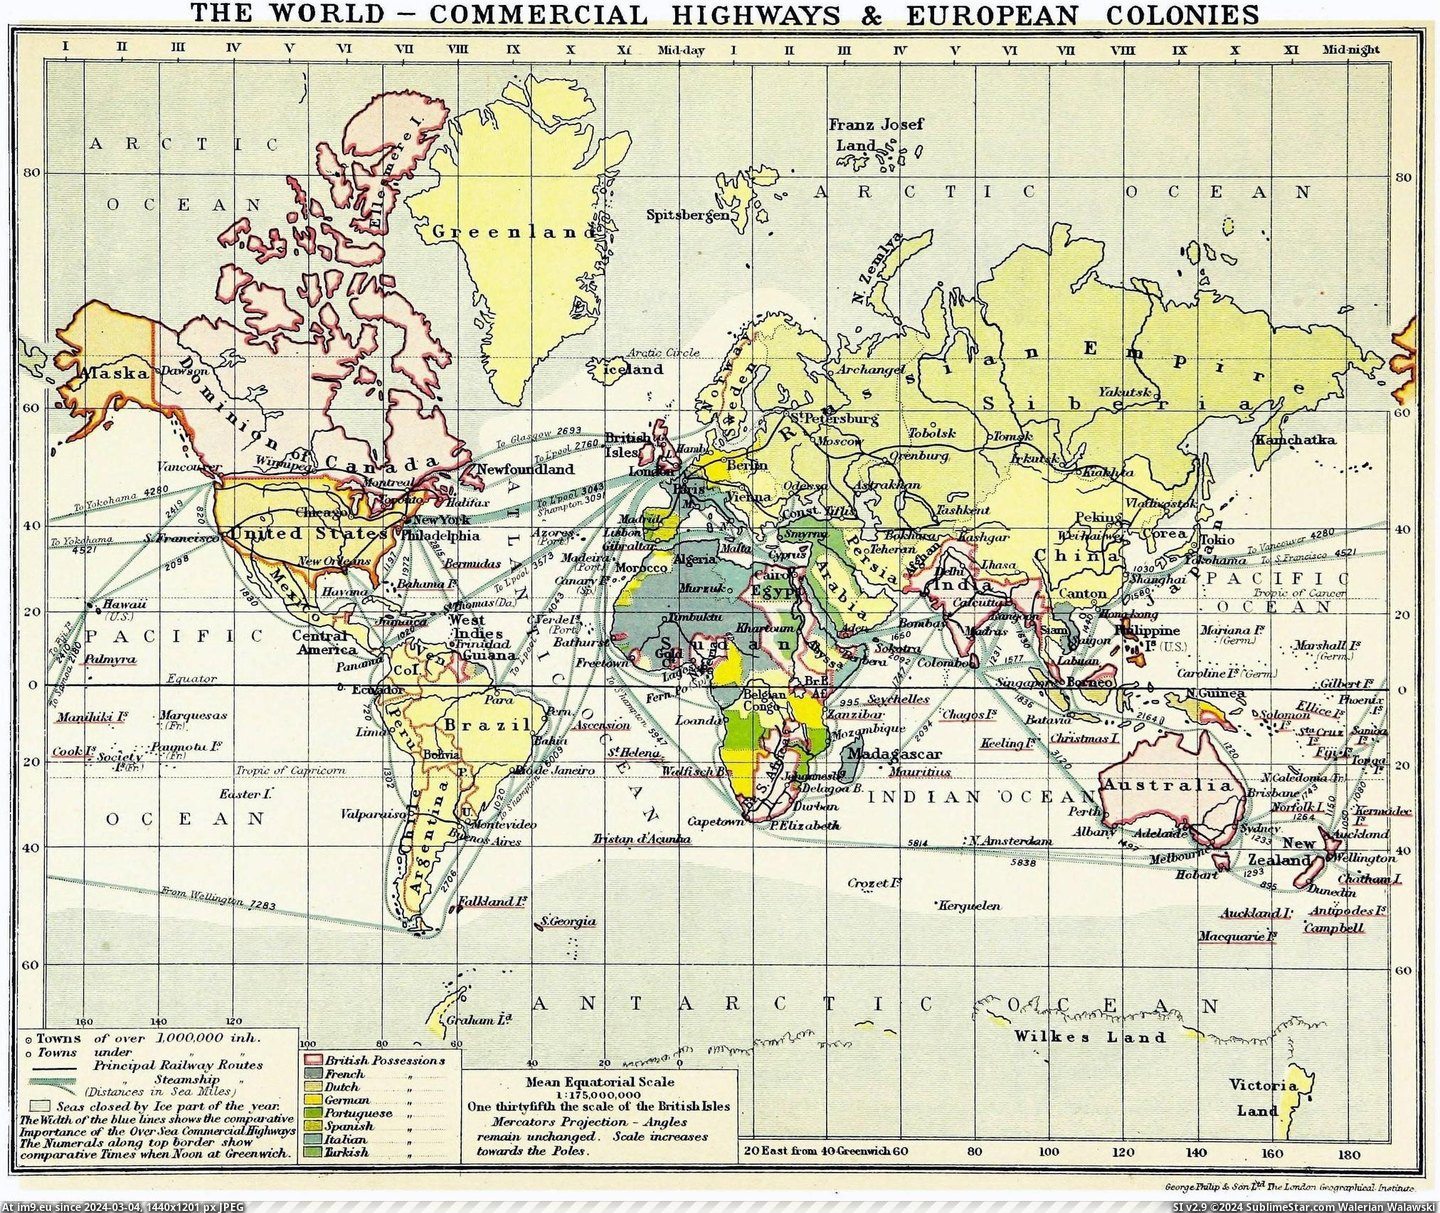 #World #Source #Colonies #Highways #European #Commercial [Mapporn] The World's Commercial Highways & European Colonies (1913 - Source In Comments) [2024x1700] Pic. (Image of album My r/MAPS favs))